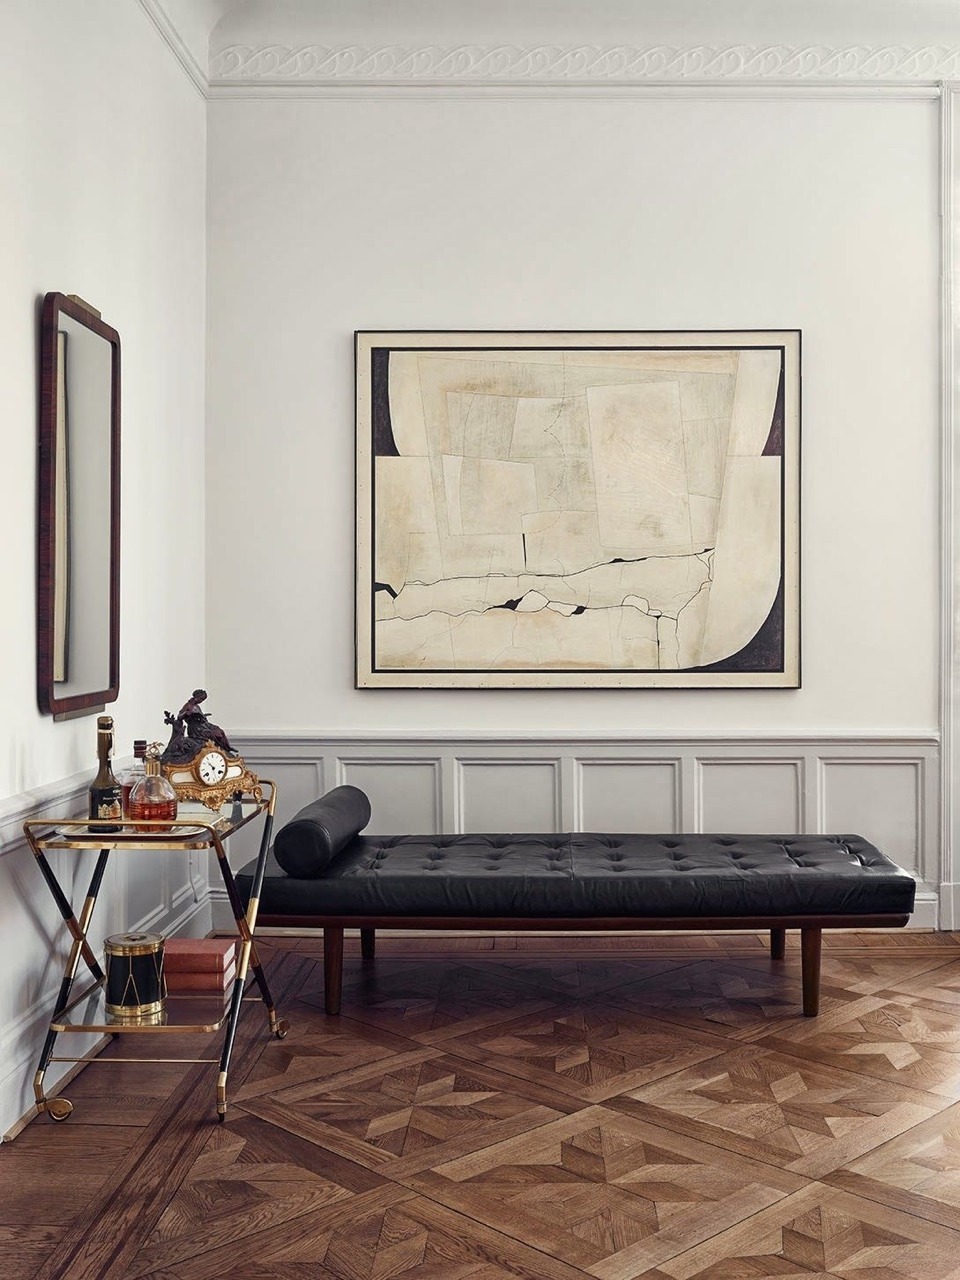 lifeonsundays:
“ The Stockholm apartment of interior stylist Joanna Lavén, featured in Elle Decoration Sweden: Hans J. Wegner´s daybed model GE-19 for Getama, Denmark, 1956.
”